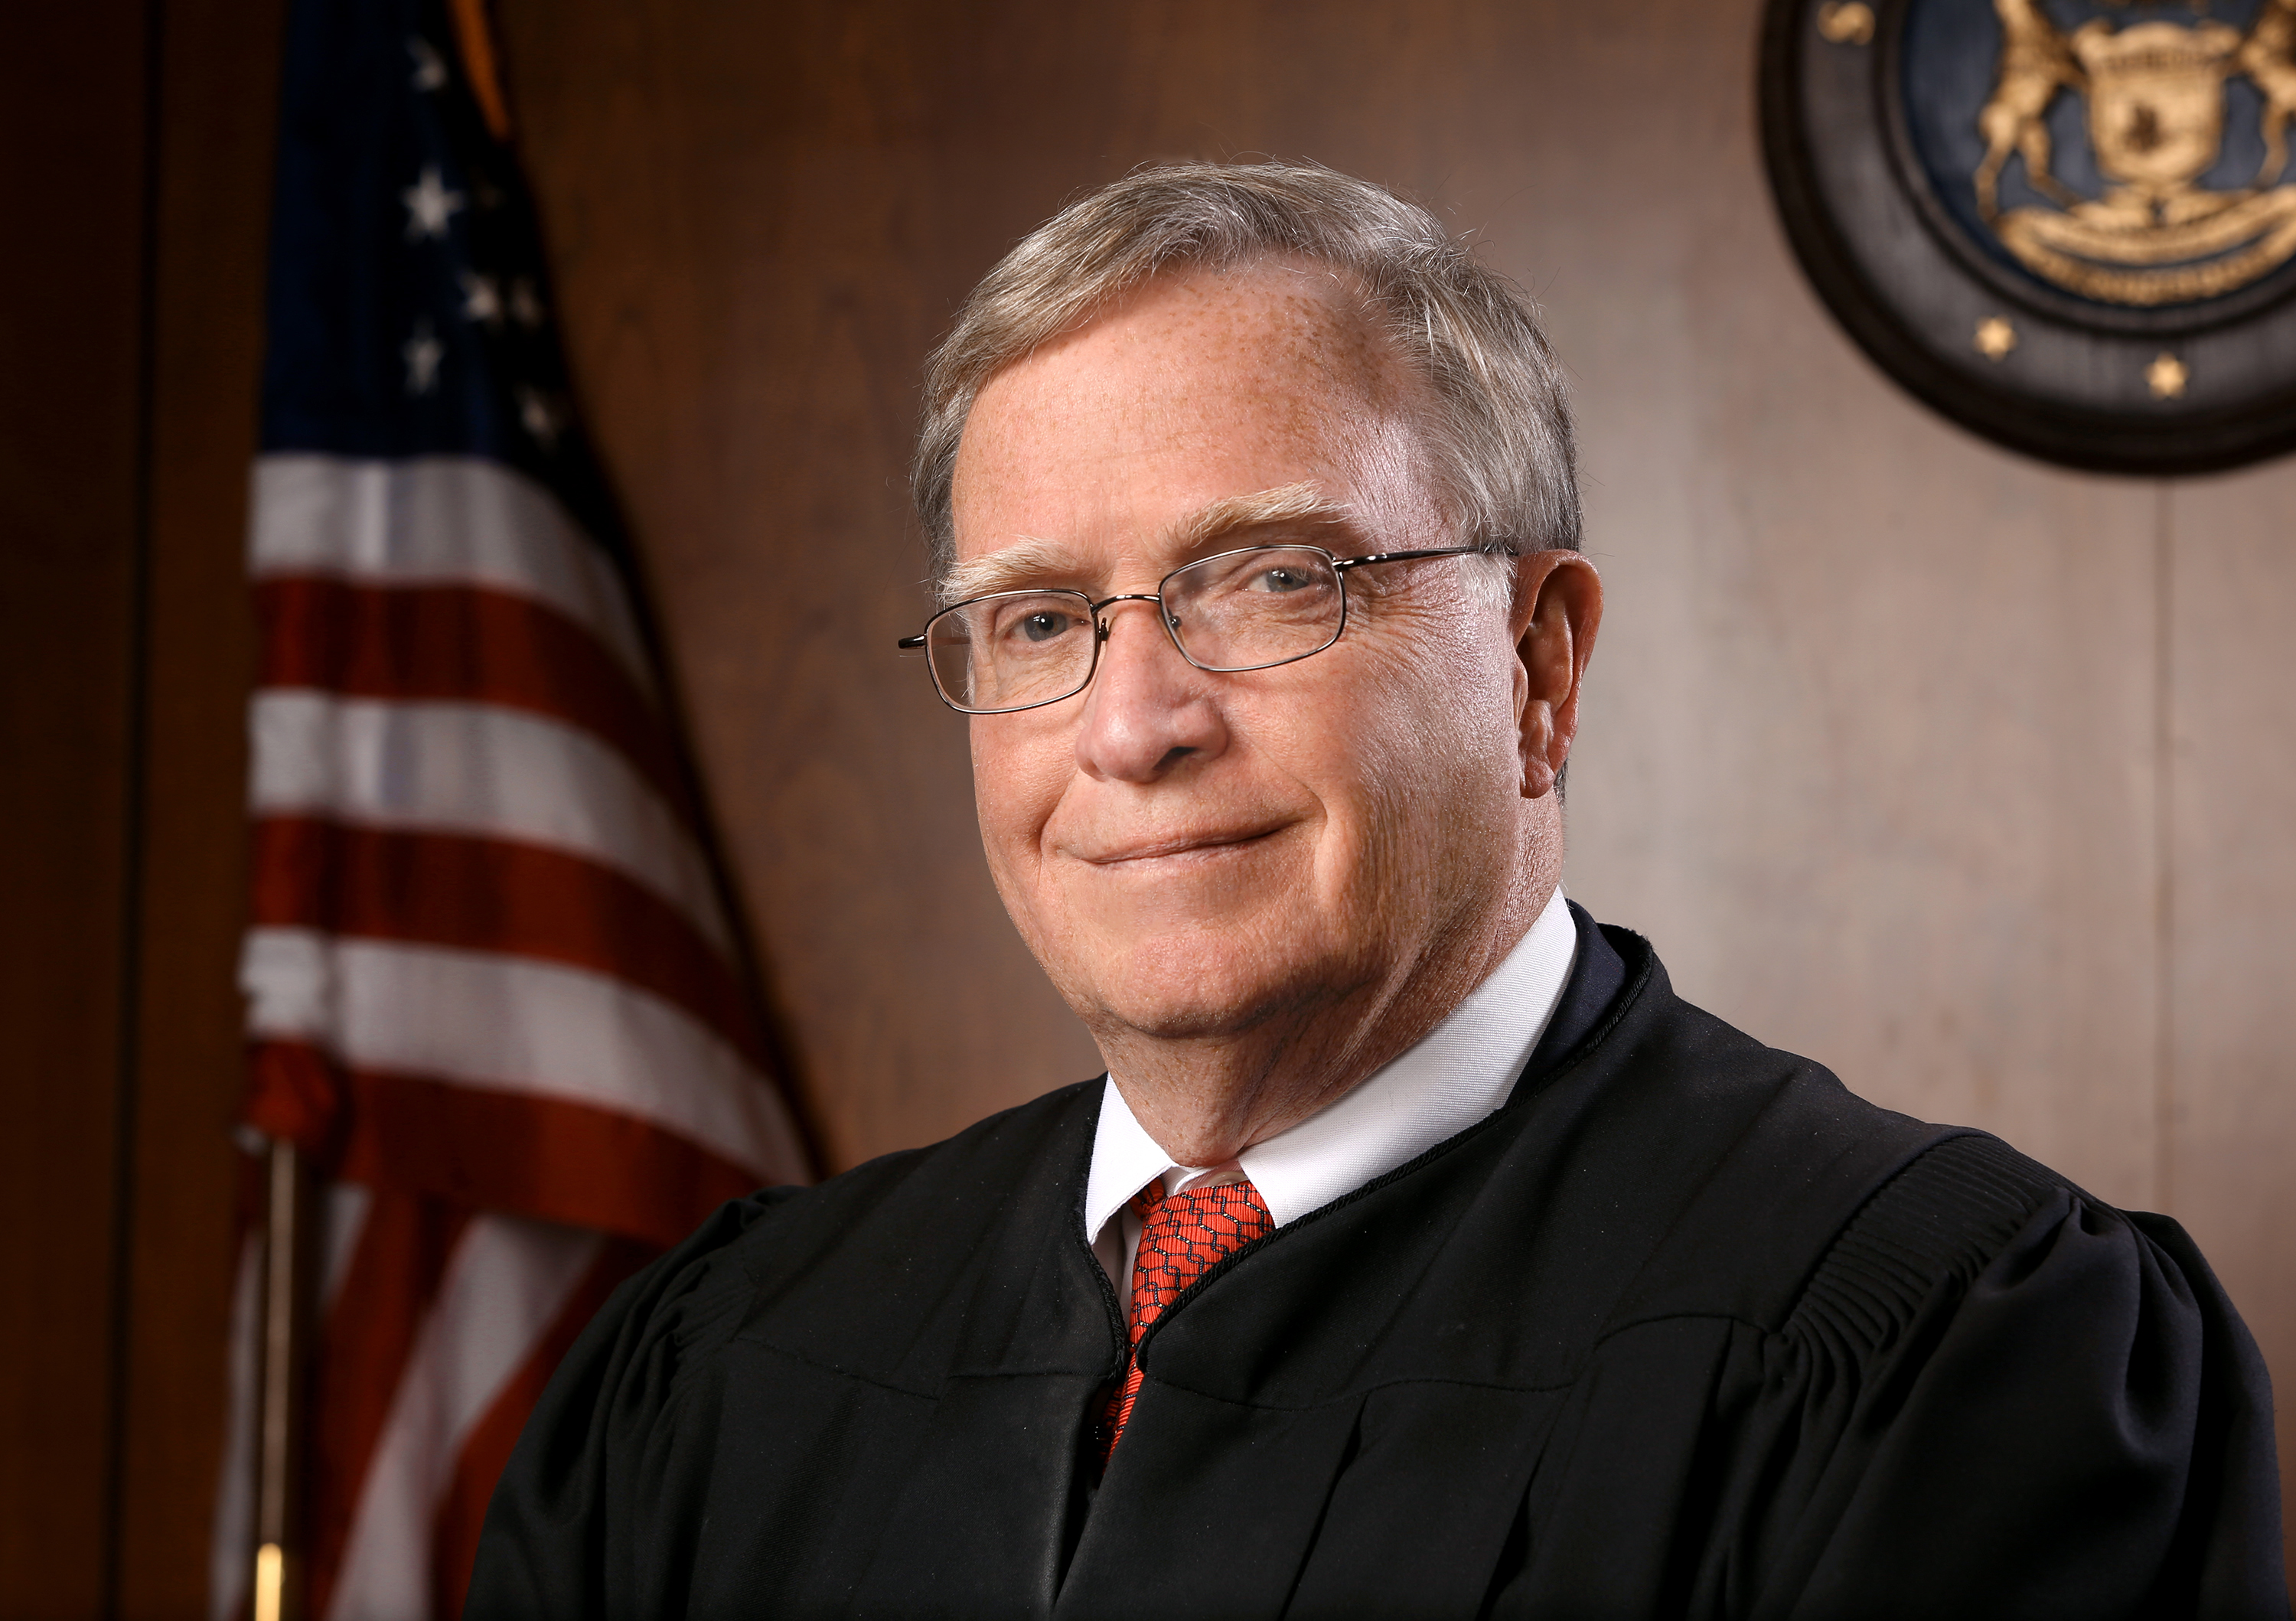 Judge Kelly